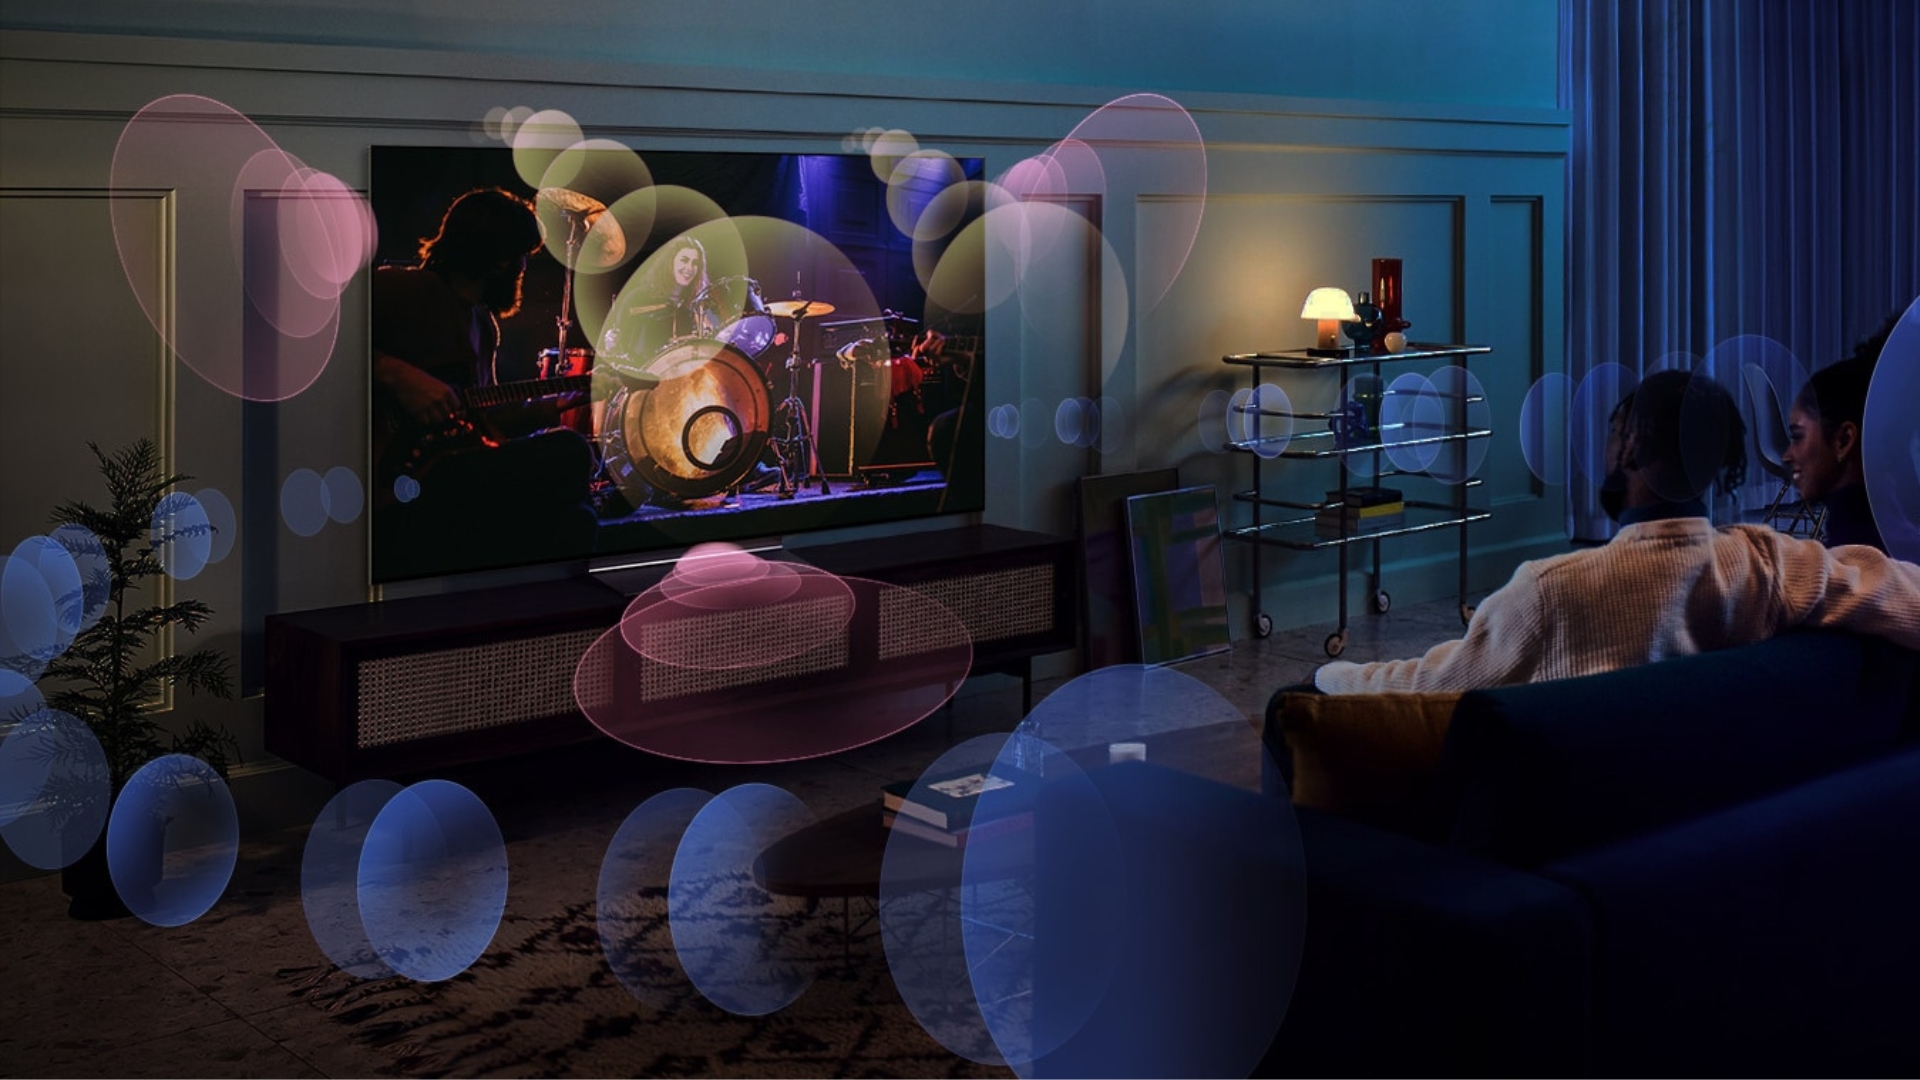 The LG CS OLED TV sound profile